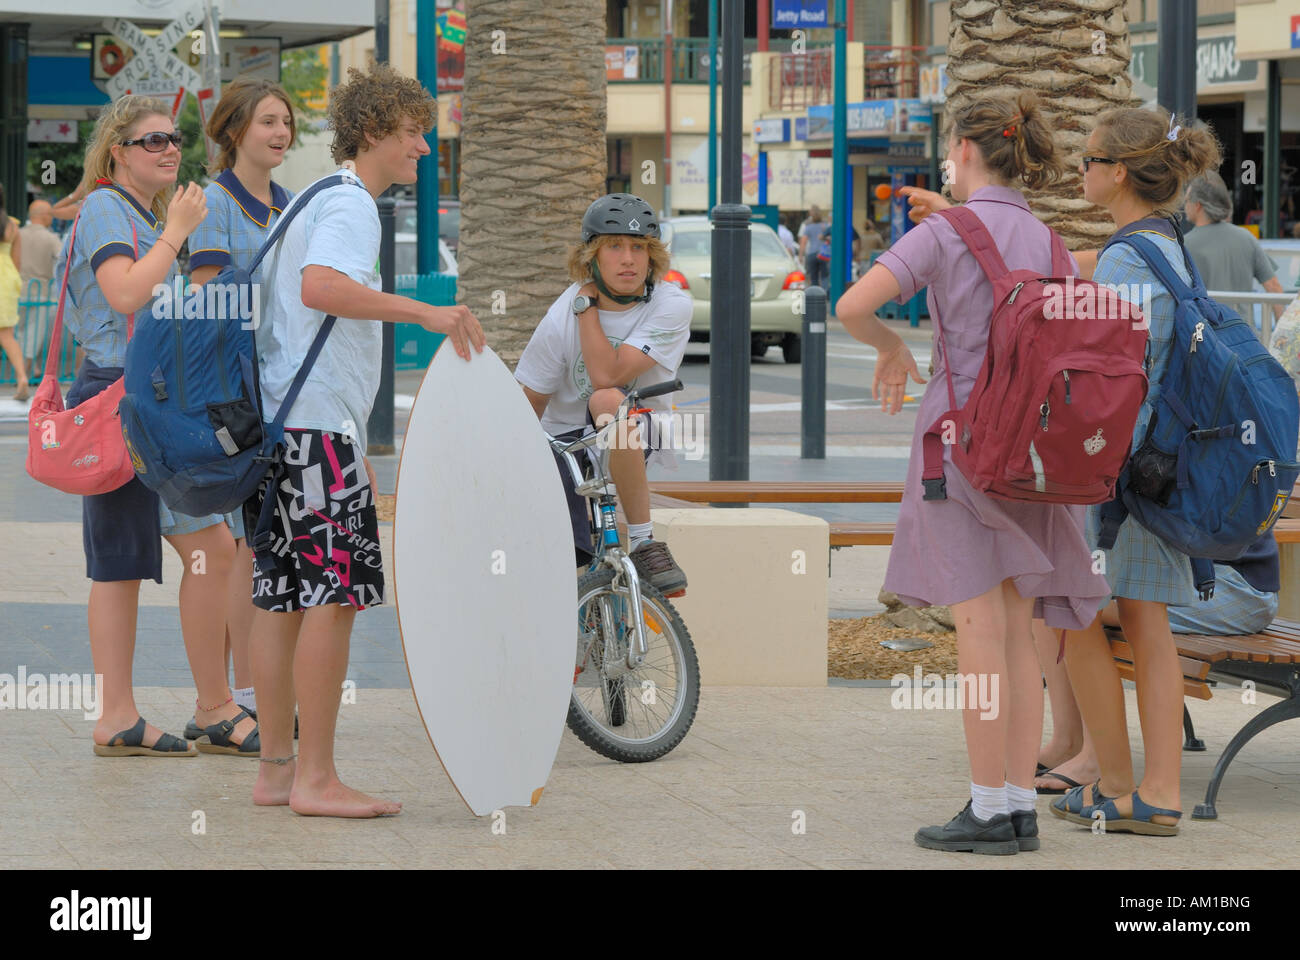 Teenagers with surf board, Glenelg, Adelaide, South Australia, Australia Stock Photo